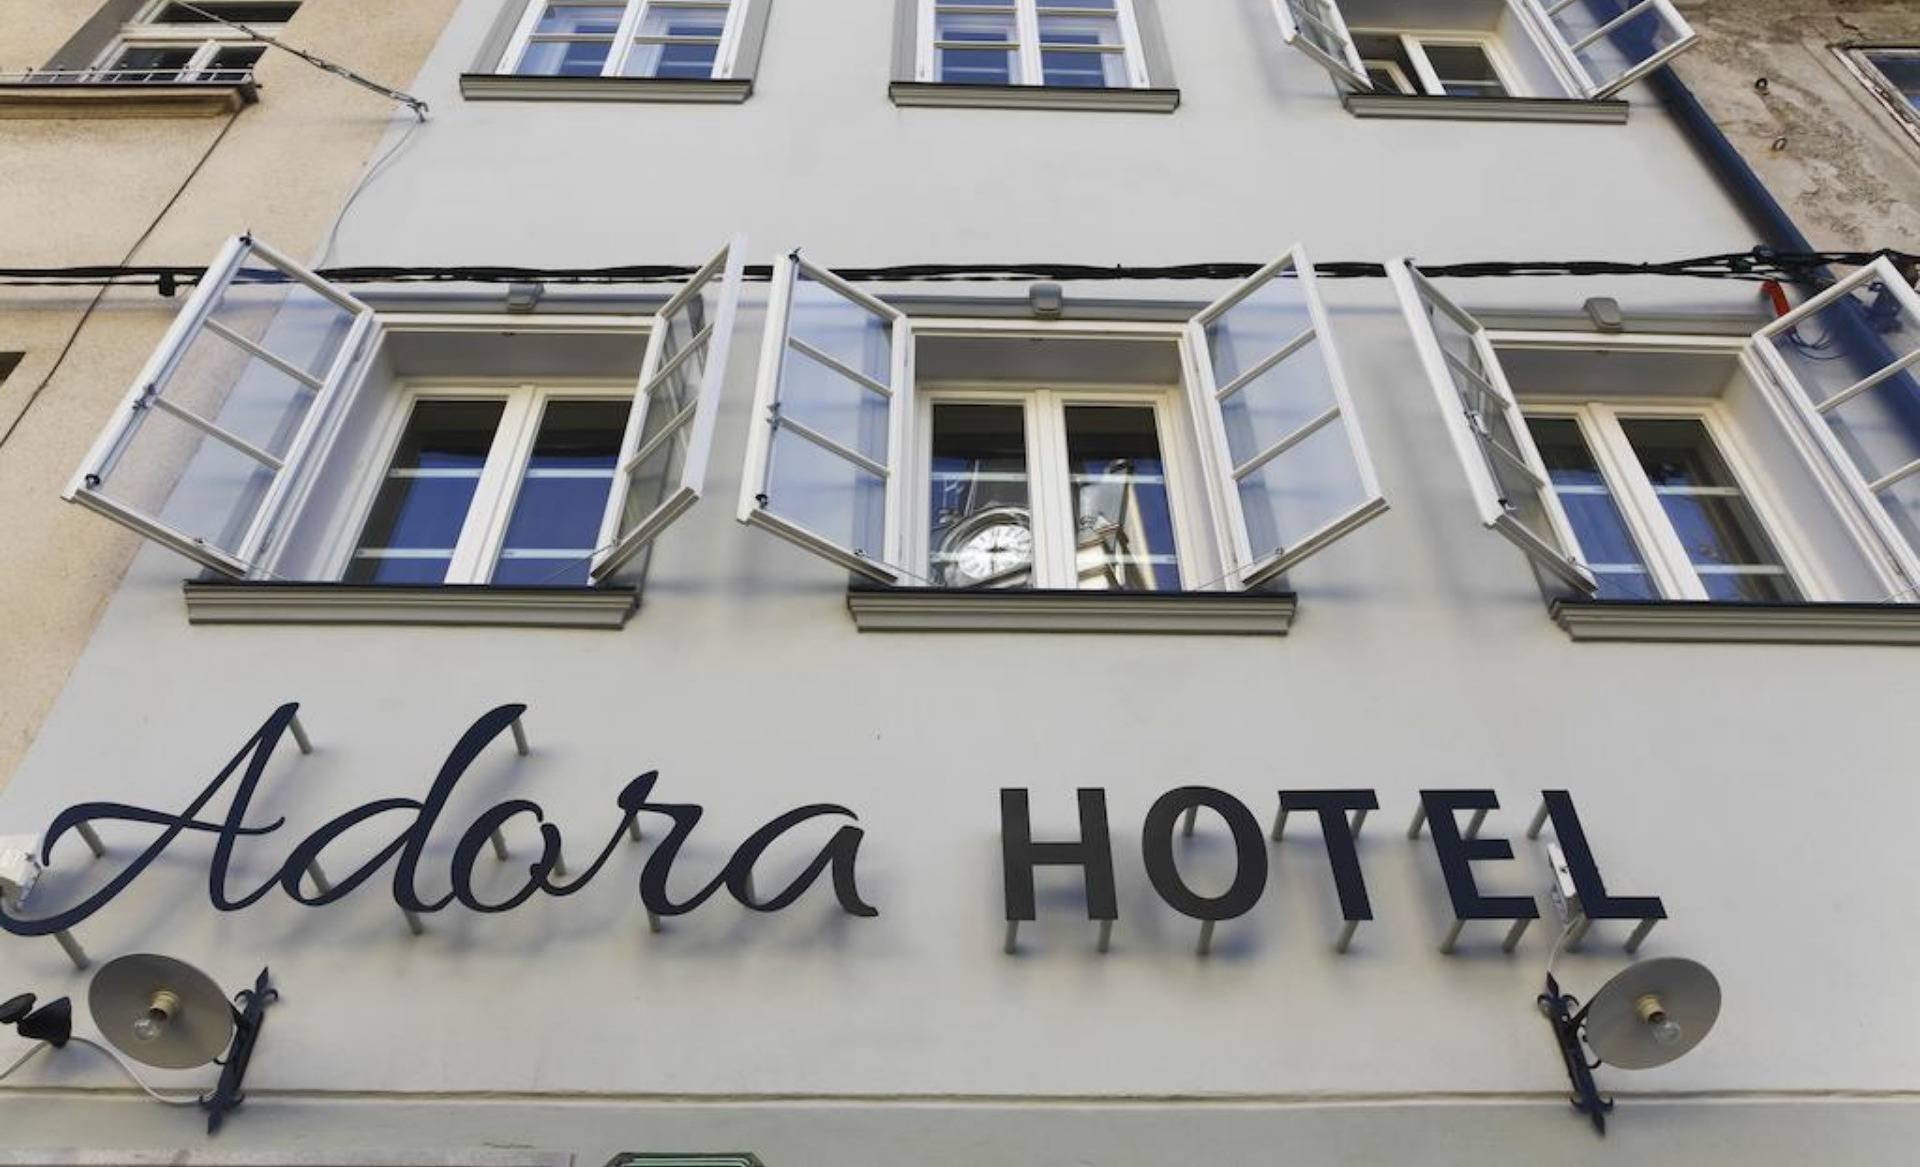 Adora Hotel Ljubljana